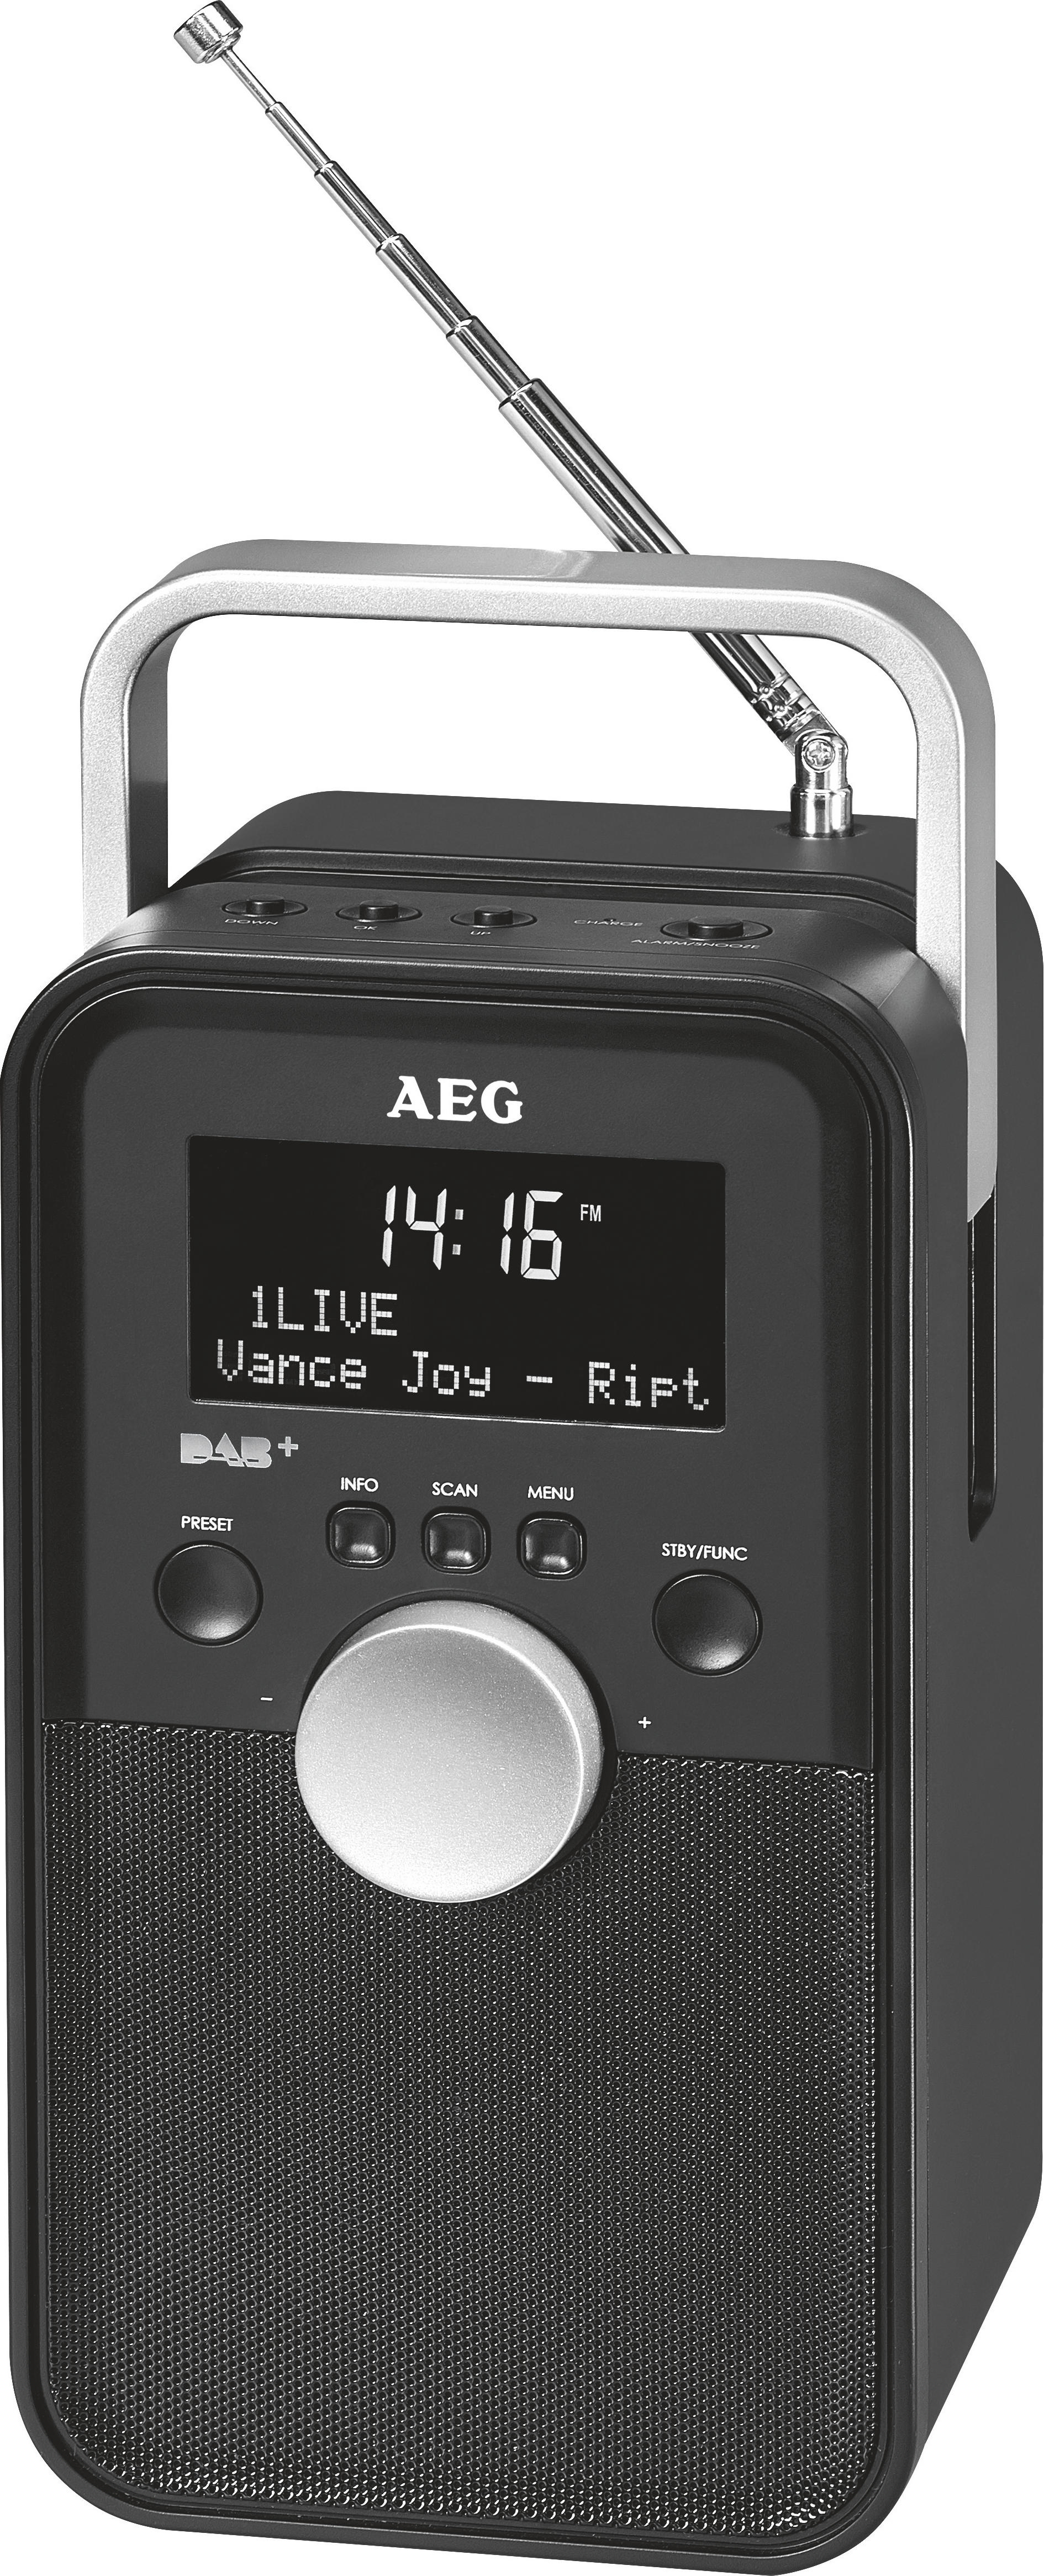 AEG DR 4149 DAB, DAB+, Schwarz Digitalradio, Digital Radio